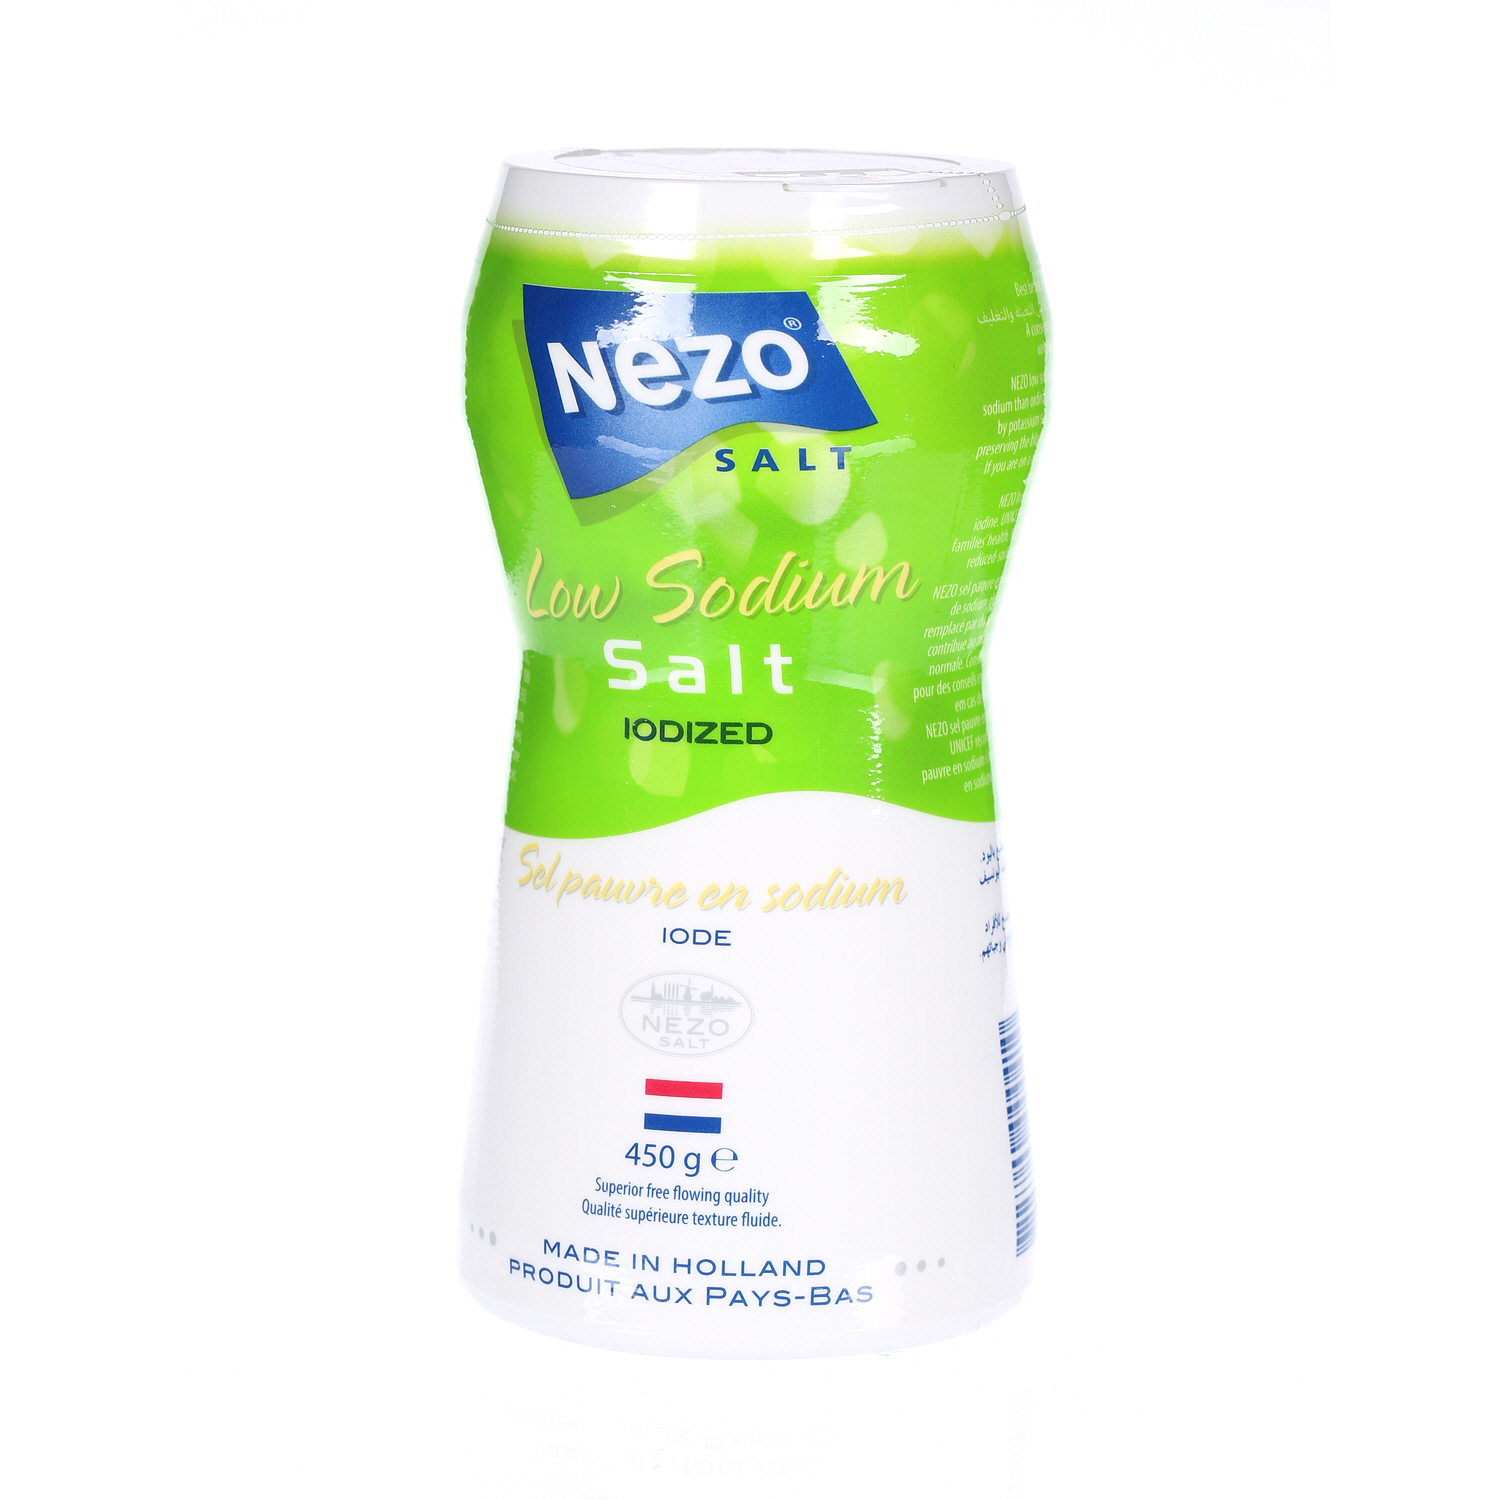 Nezo Salt Low Sodium with Iodine 450 g